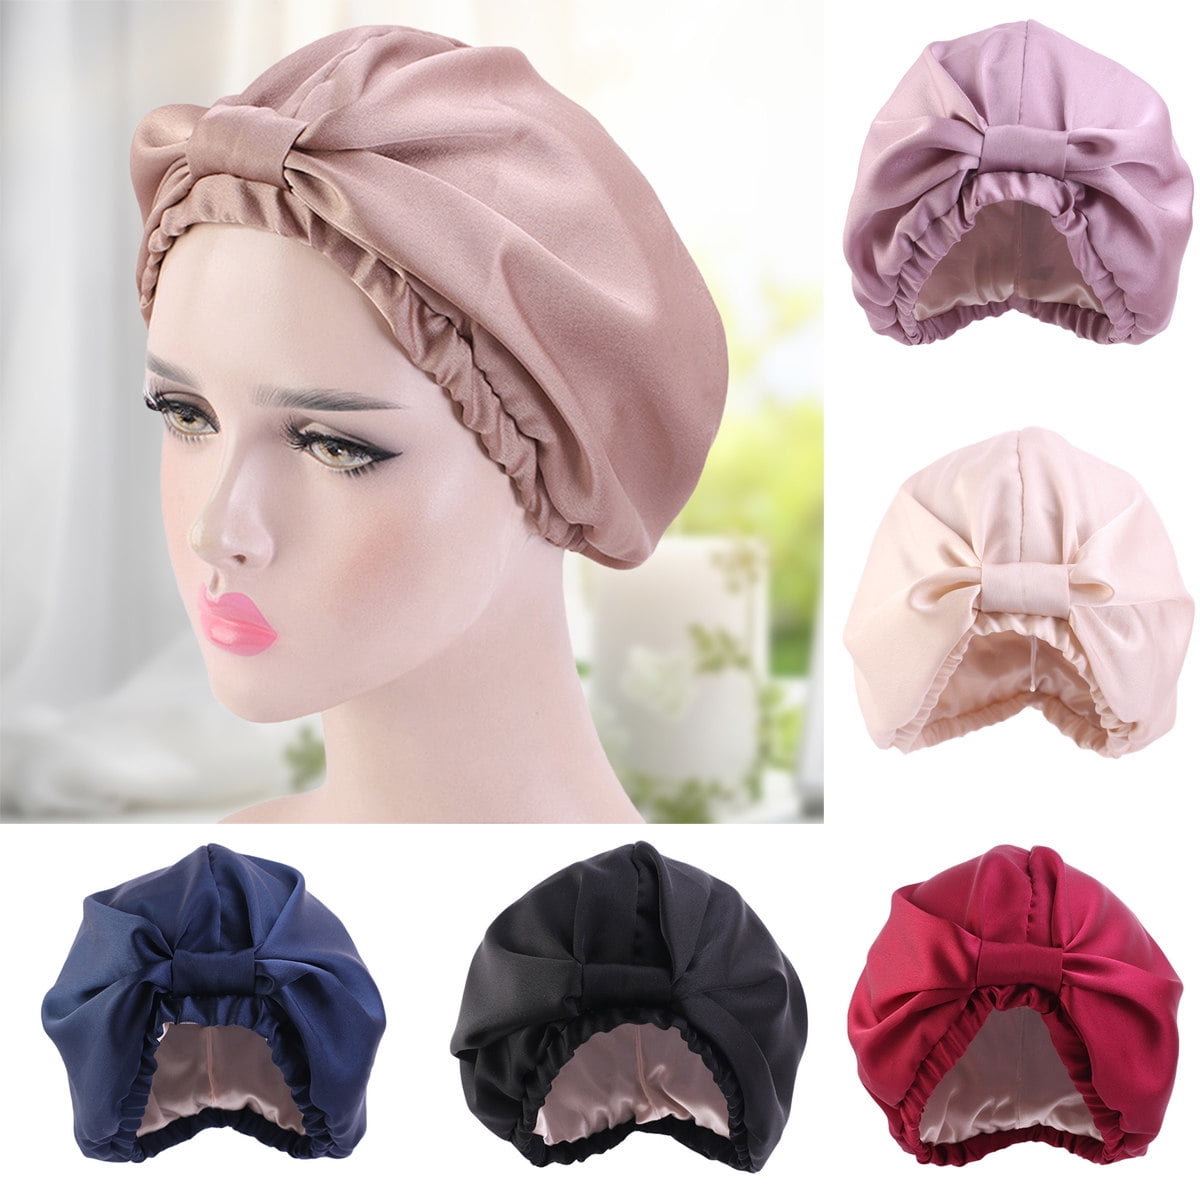 Leeons Silk Sleeping Cap Night Hat Head Cover Bonnet Satin Cheveux